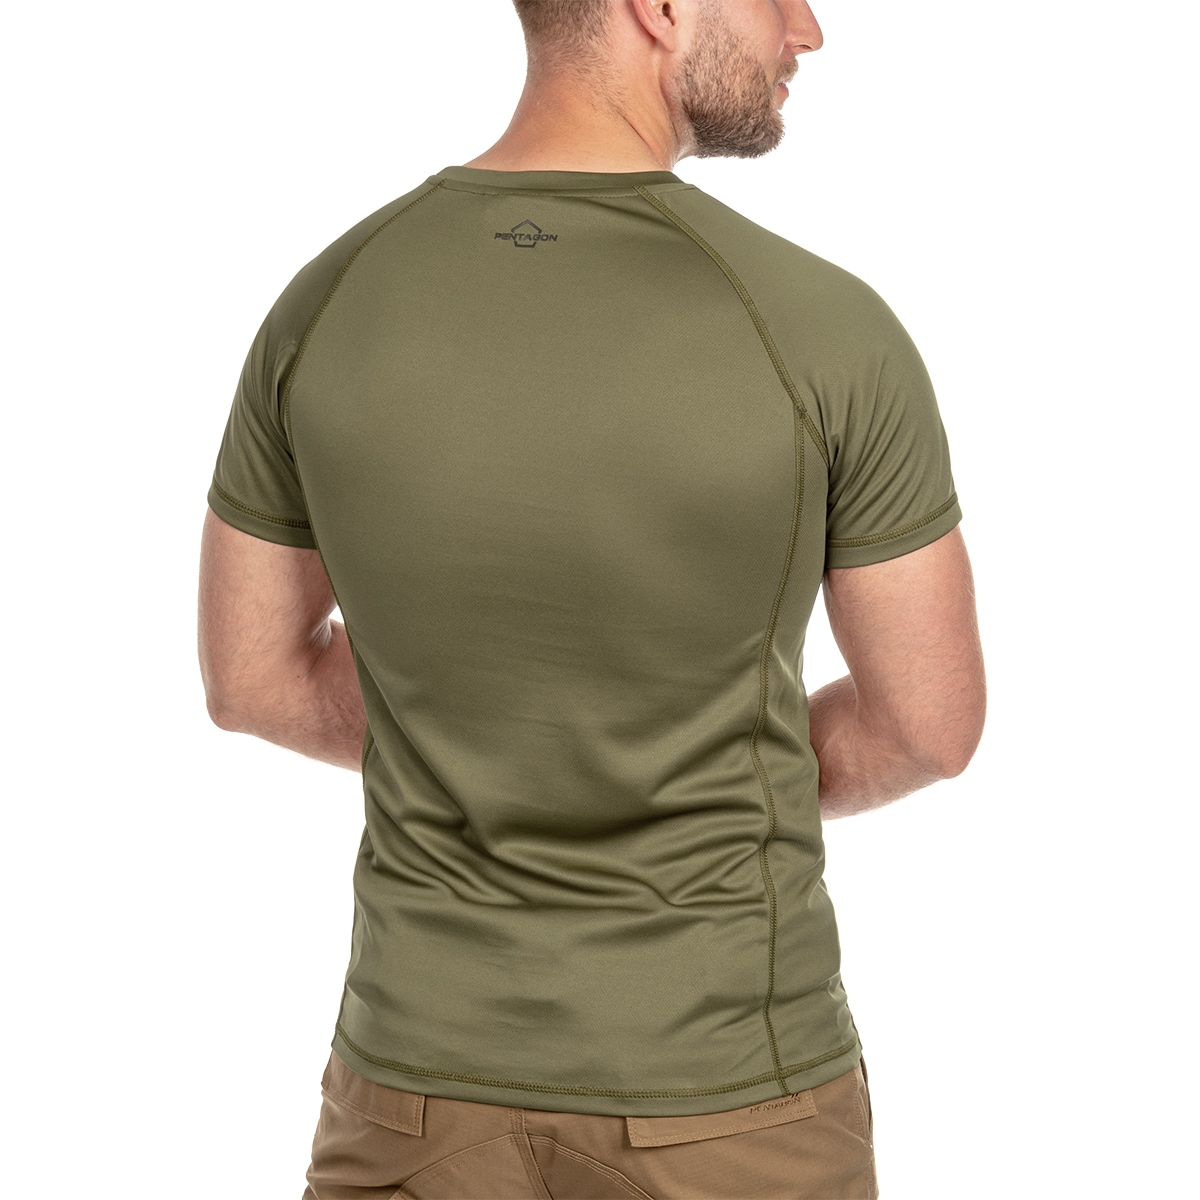 Koszulka termoaktywna Pentagon Body Shock - Olive